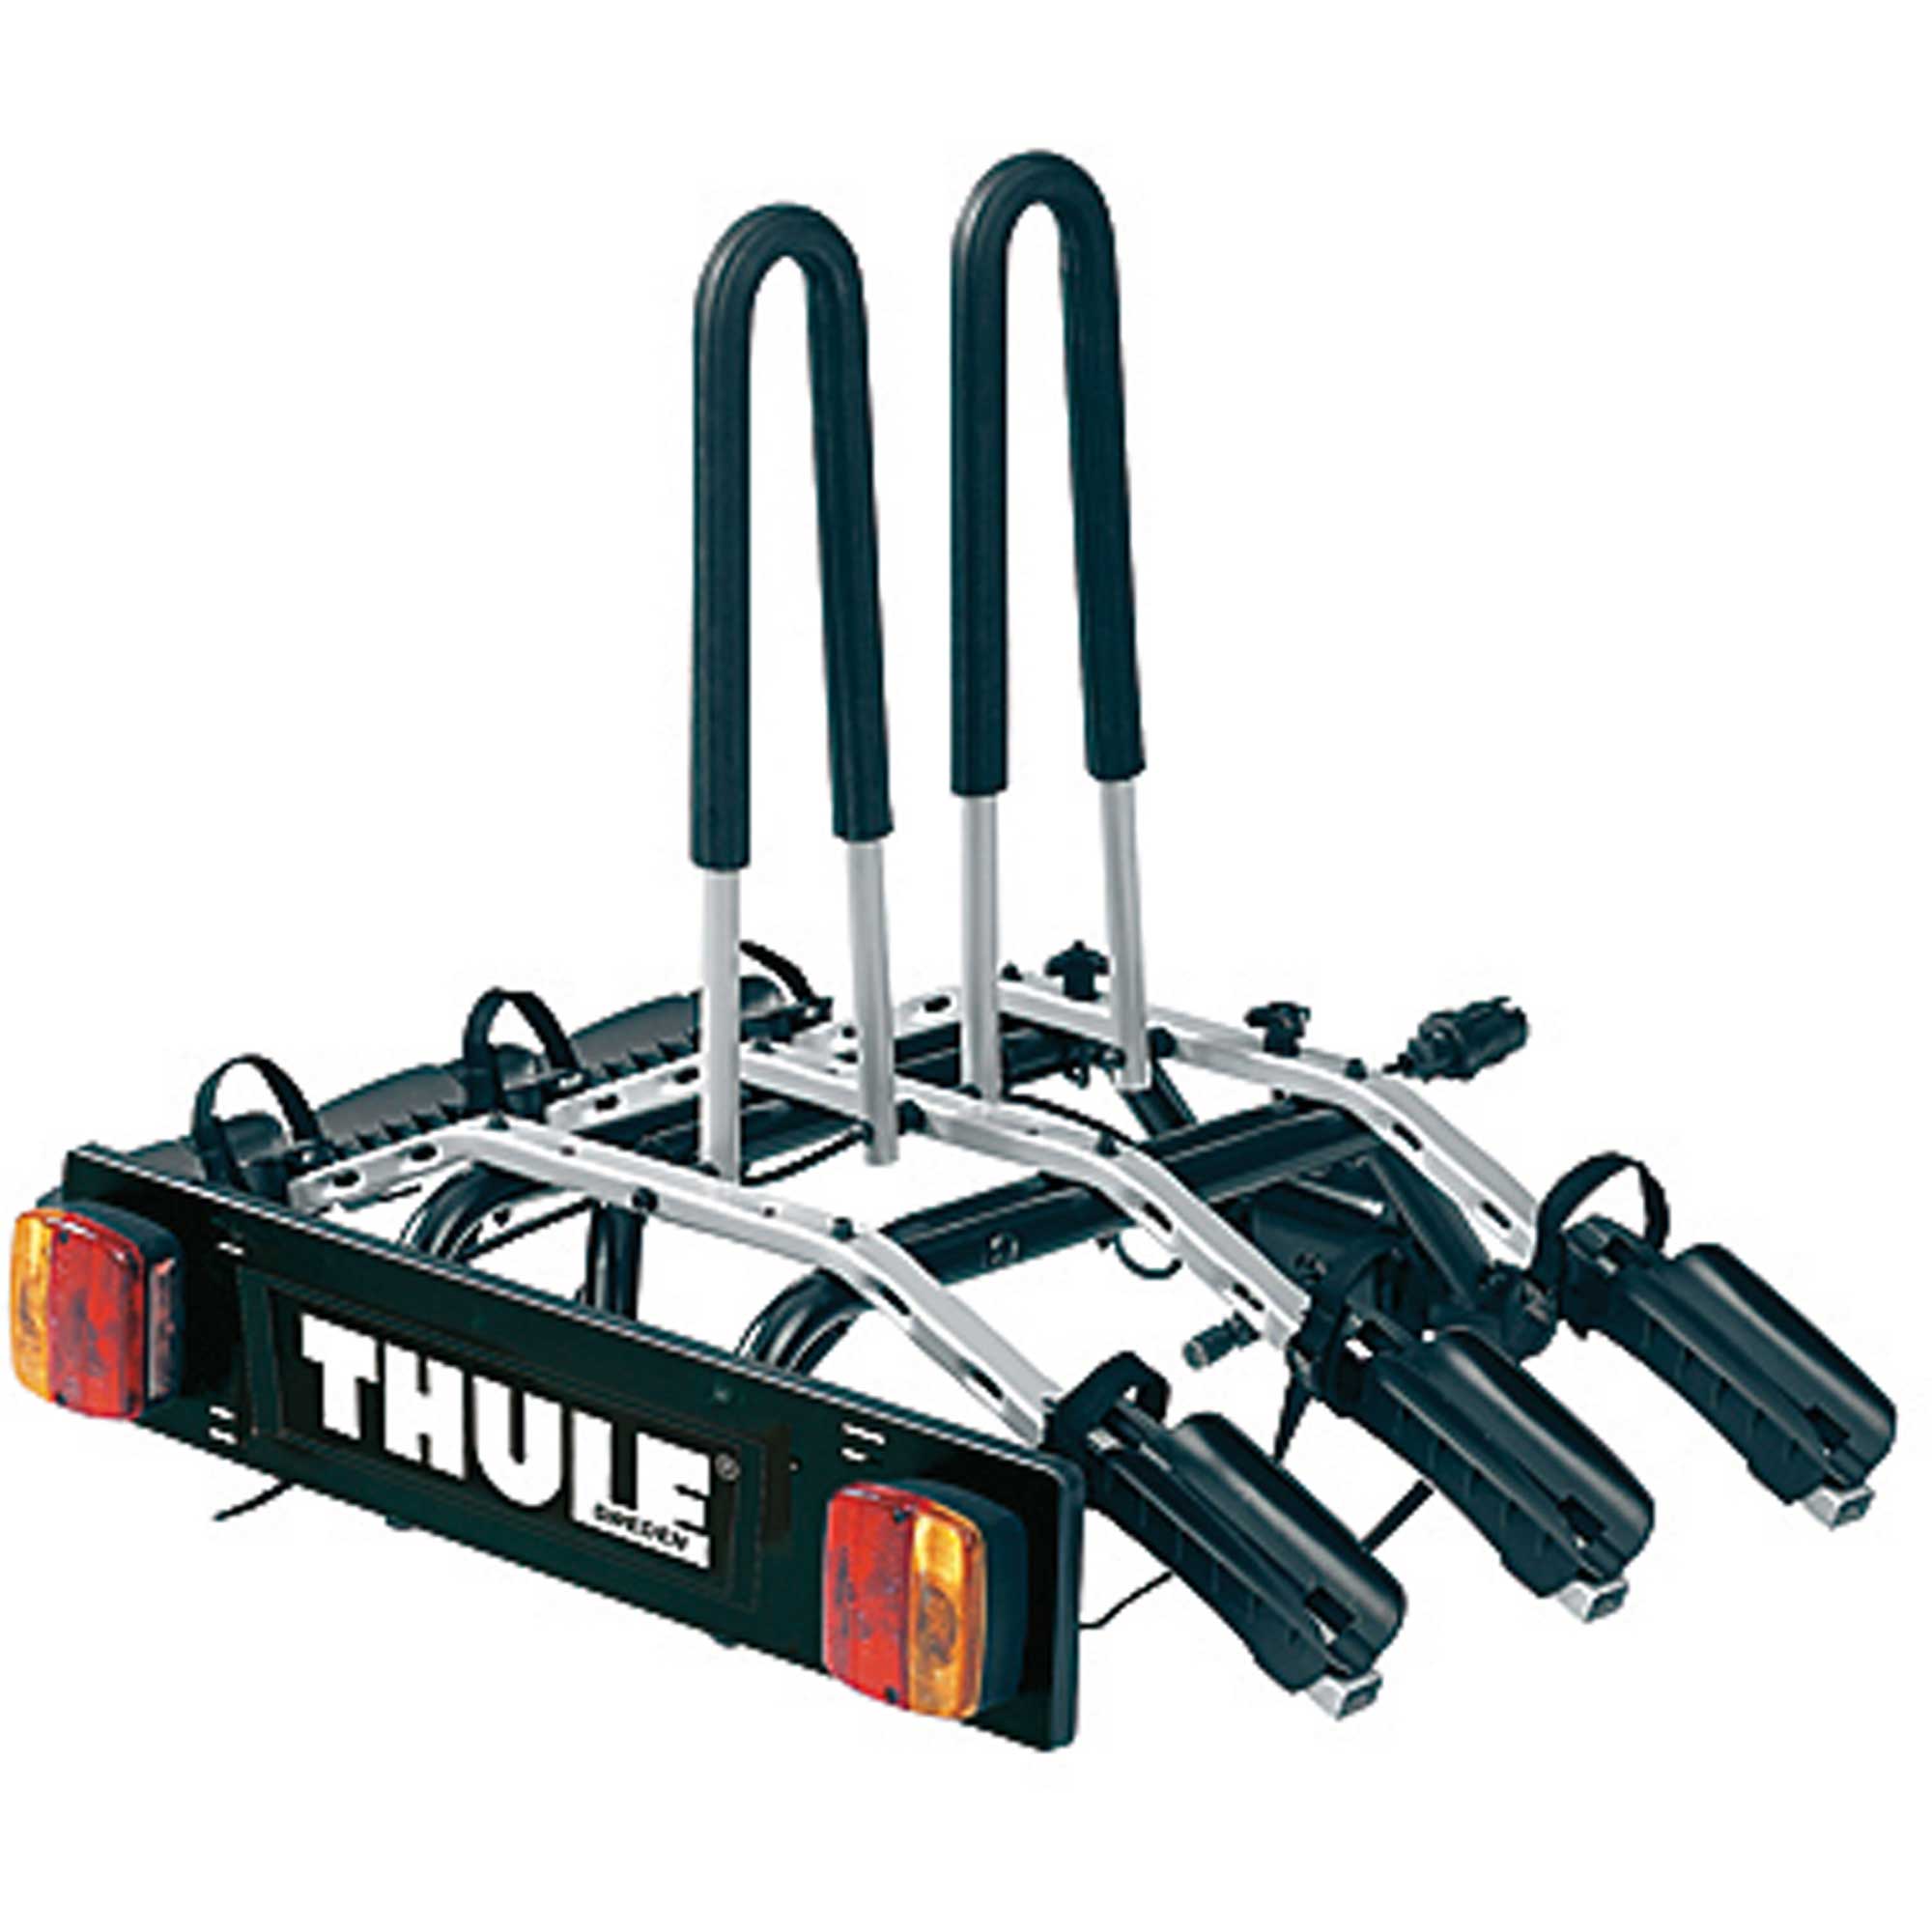 thule 3 bike rack tow bar